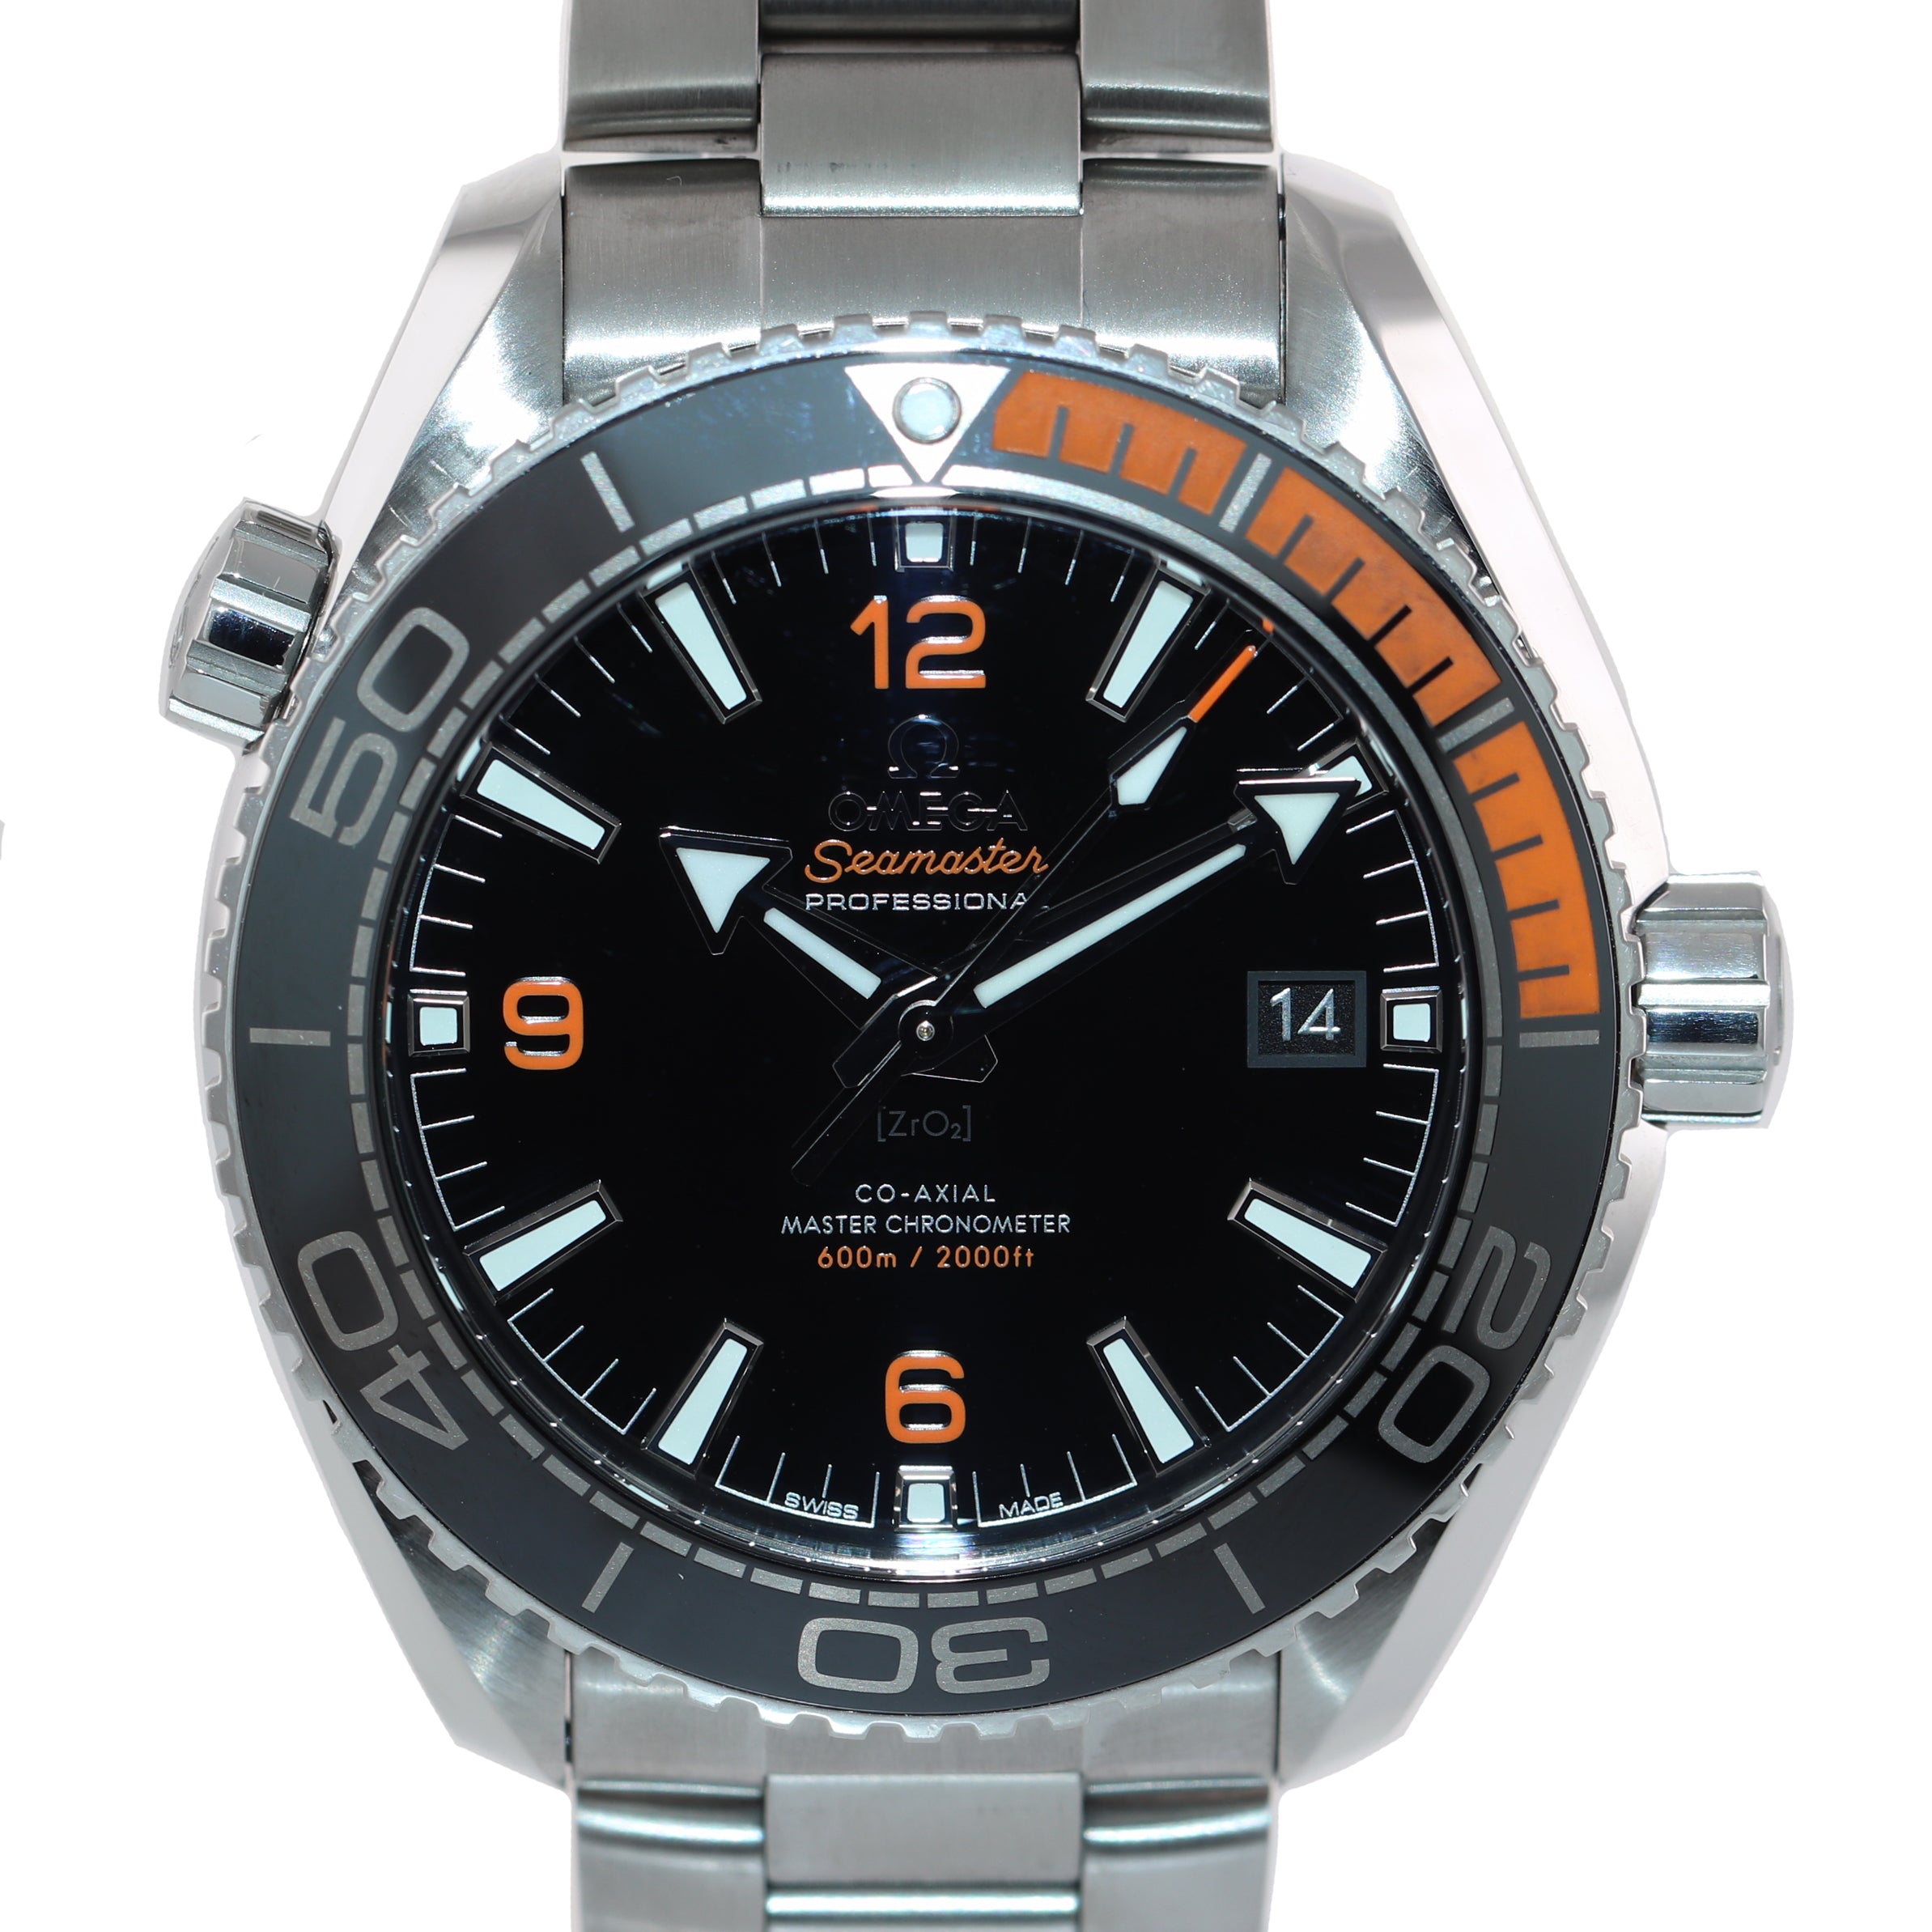 2021 MINT Omega Seamaster Planet Ocean 43.5mm 215.30.44.21.01.002 Ceramic Watch